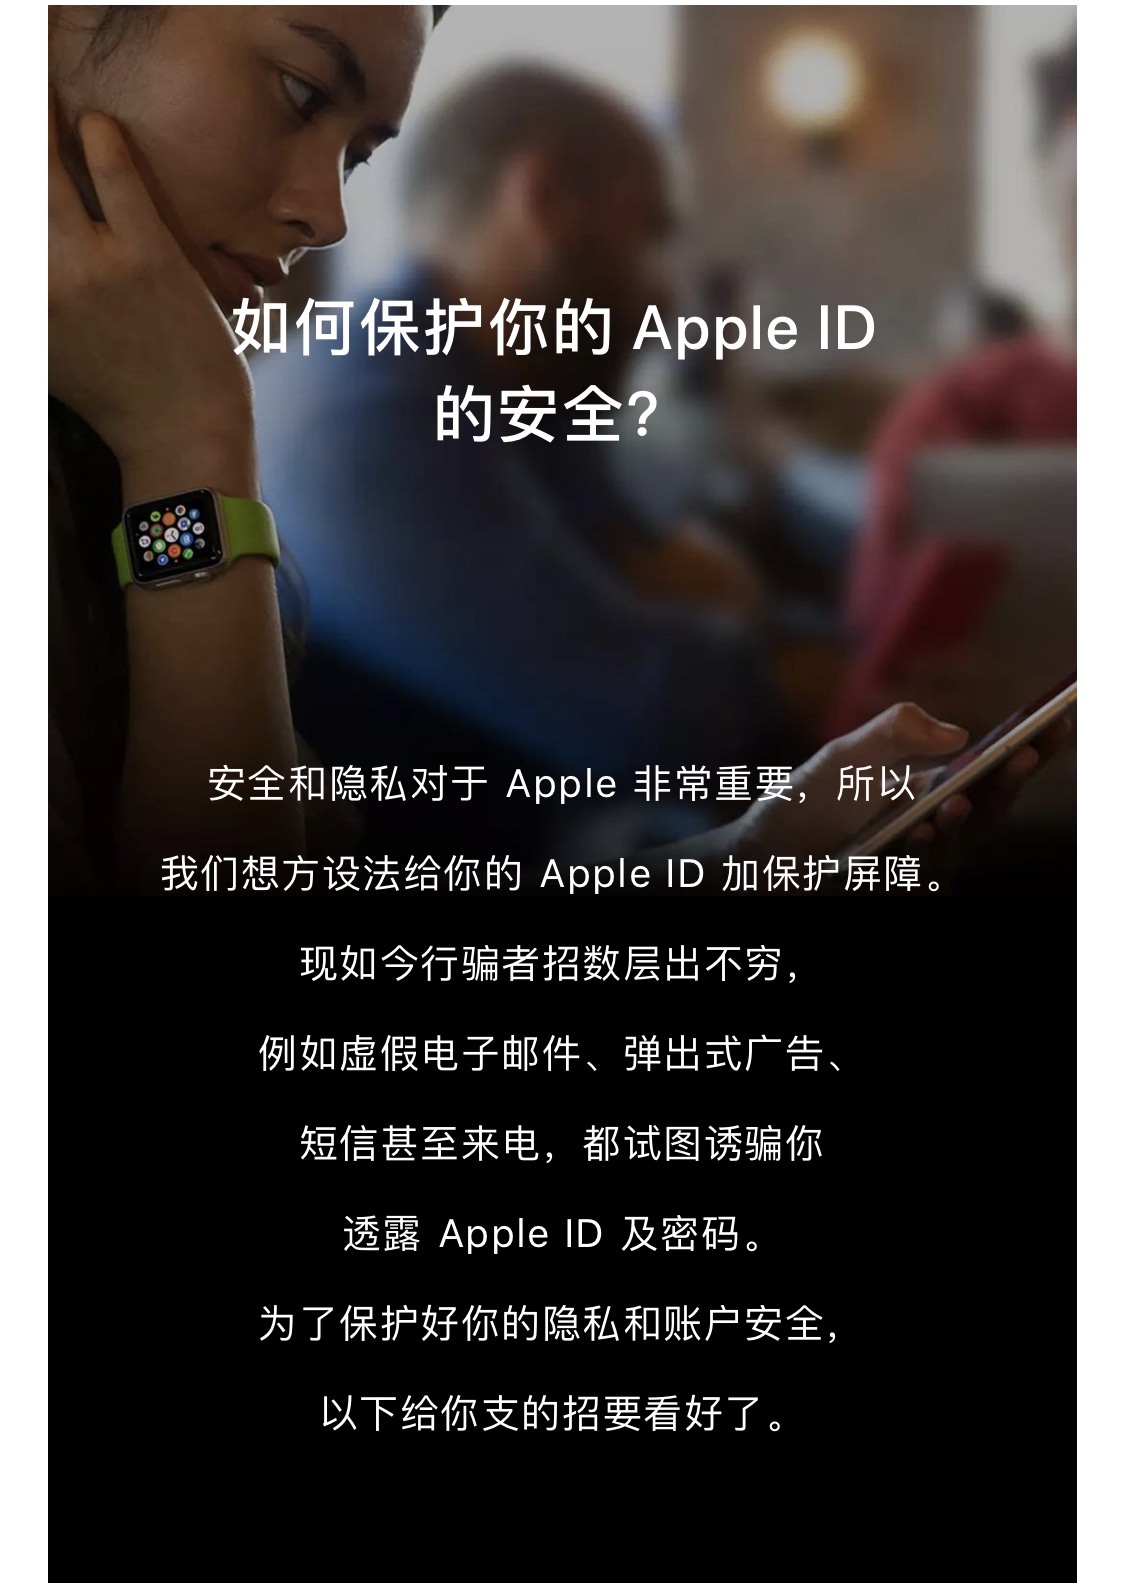 Apple ID官方网科谱：全方位了解Apple ID，全方位保护自己